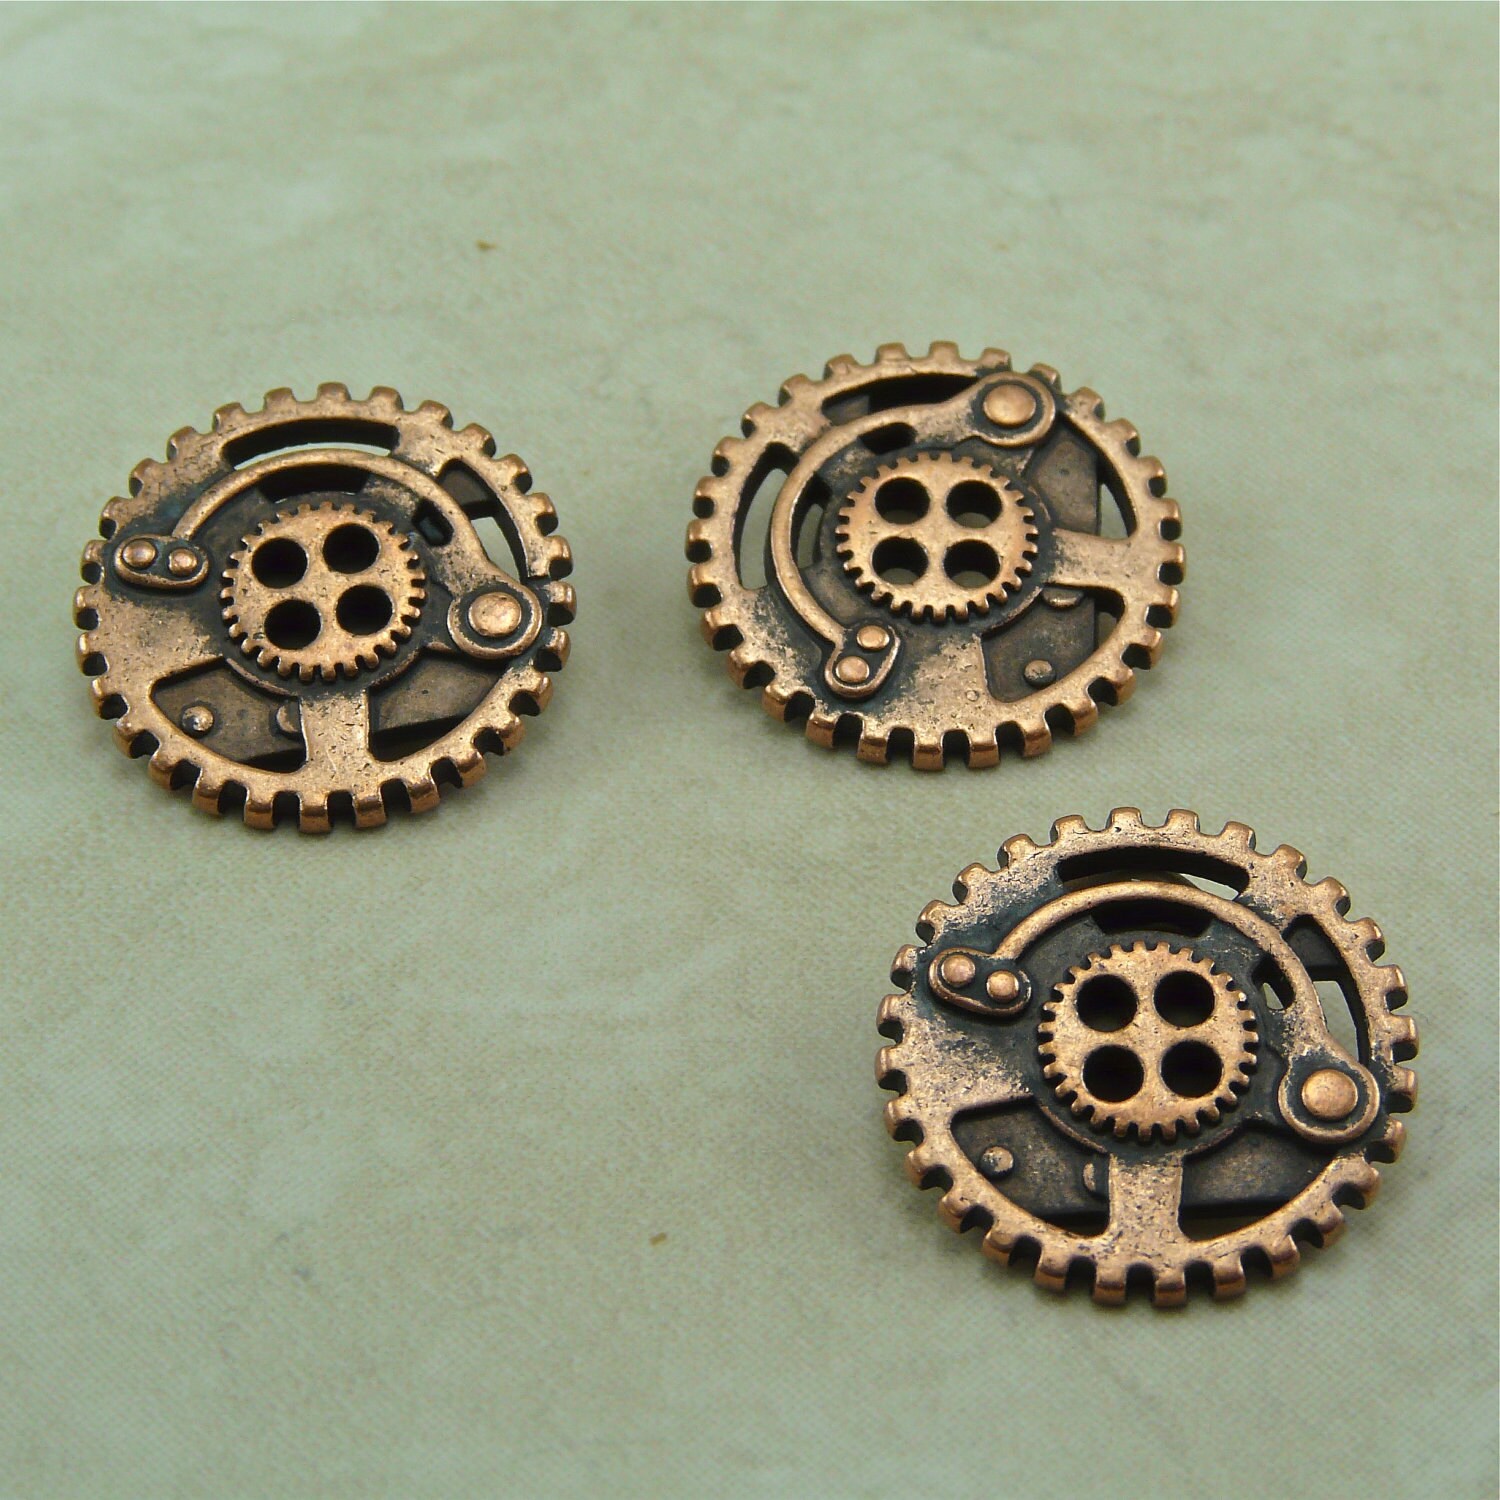 Small Steampunk Antique Gear Copper Buttons gear sprocket